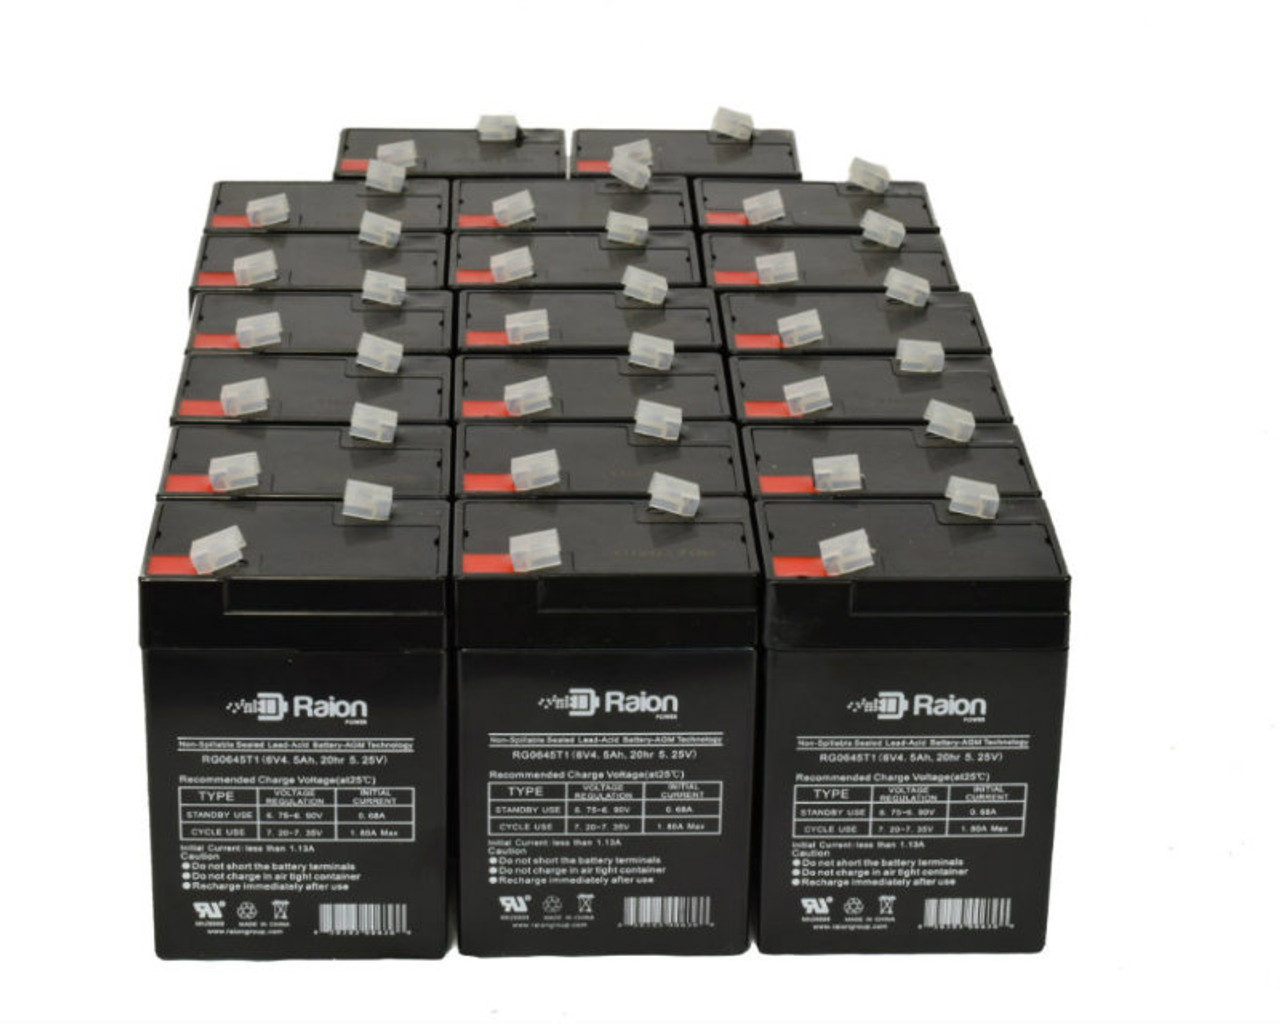 Raion Power 6 Volt 4.5Ah RG0645T1 Replacement Battery for HKBil 3FM6.0 - 20 Pack